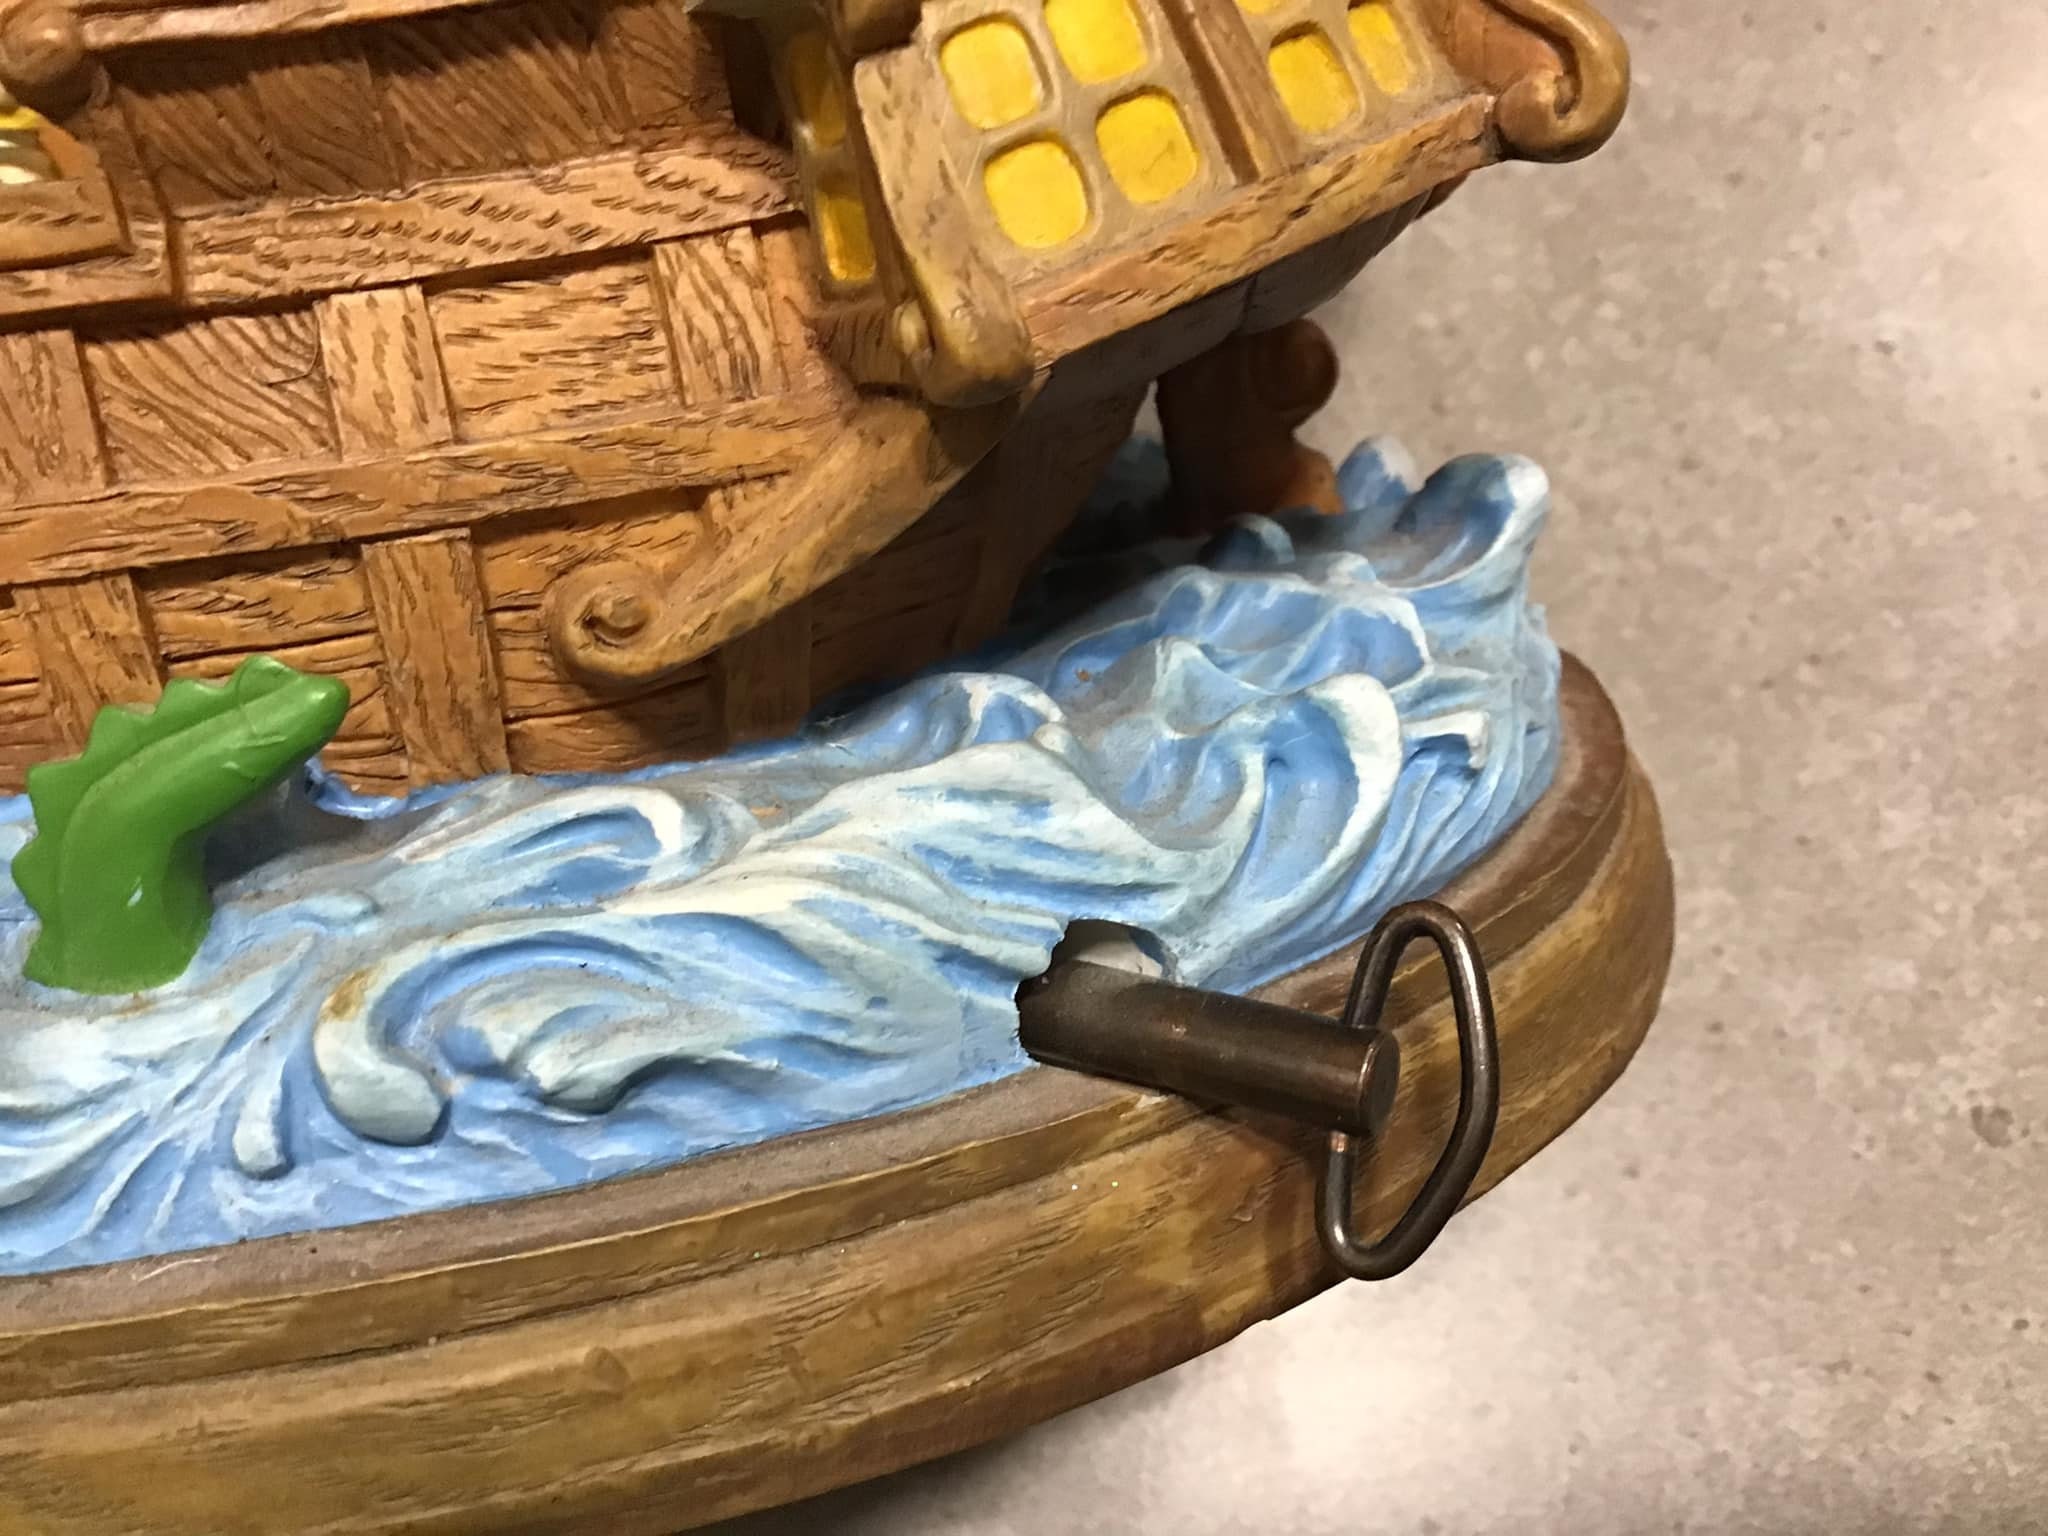 Disney Snow Globe Peter Pan's Pirate Ship Showdown Captain Hook You Can Fly